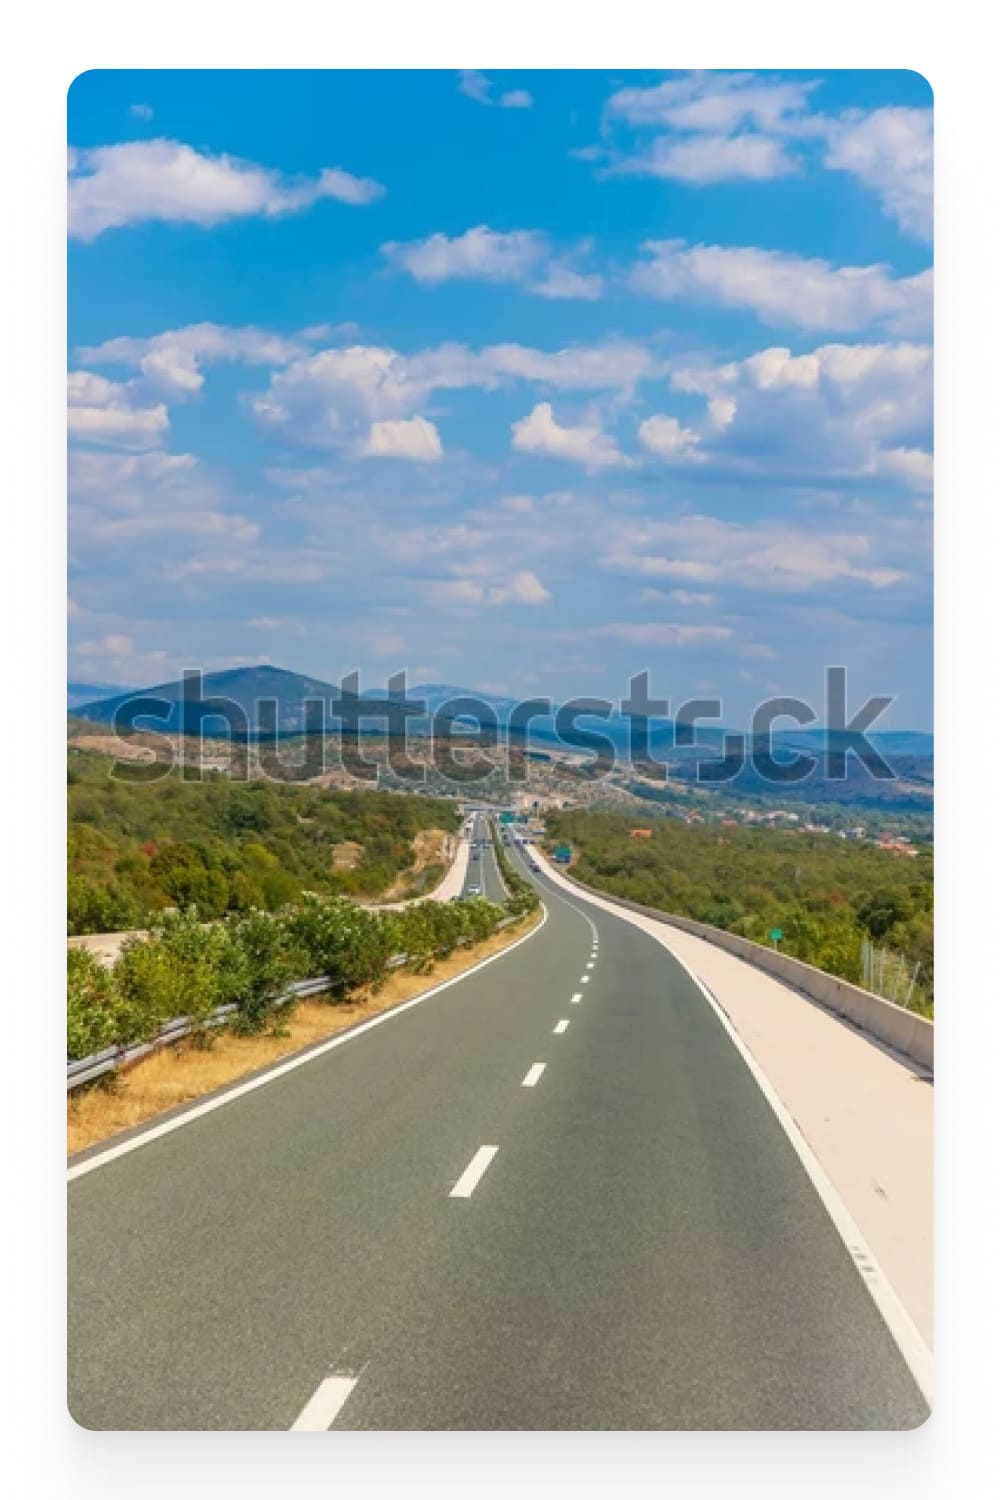 Photo of an asphalt road among the hills.